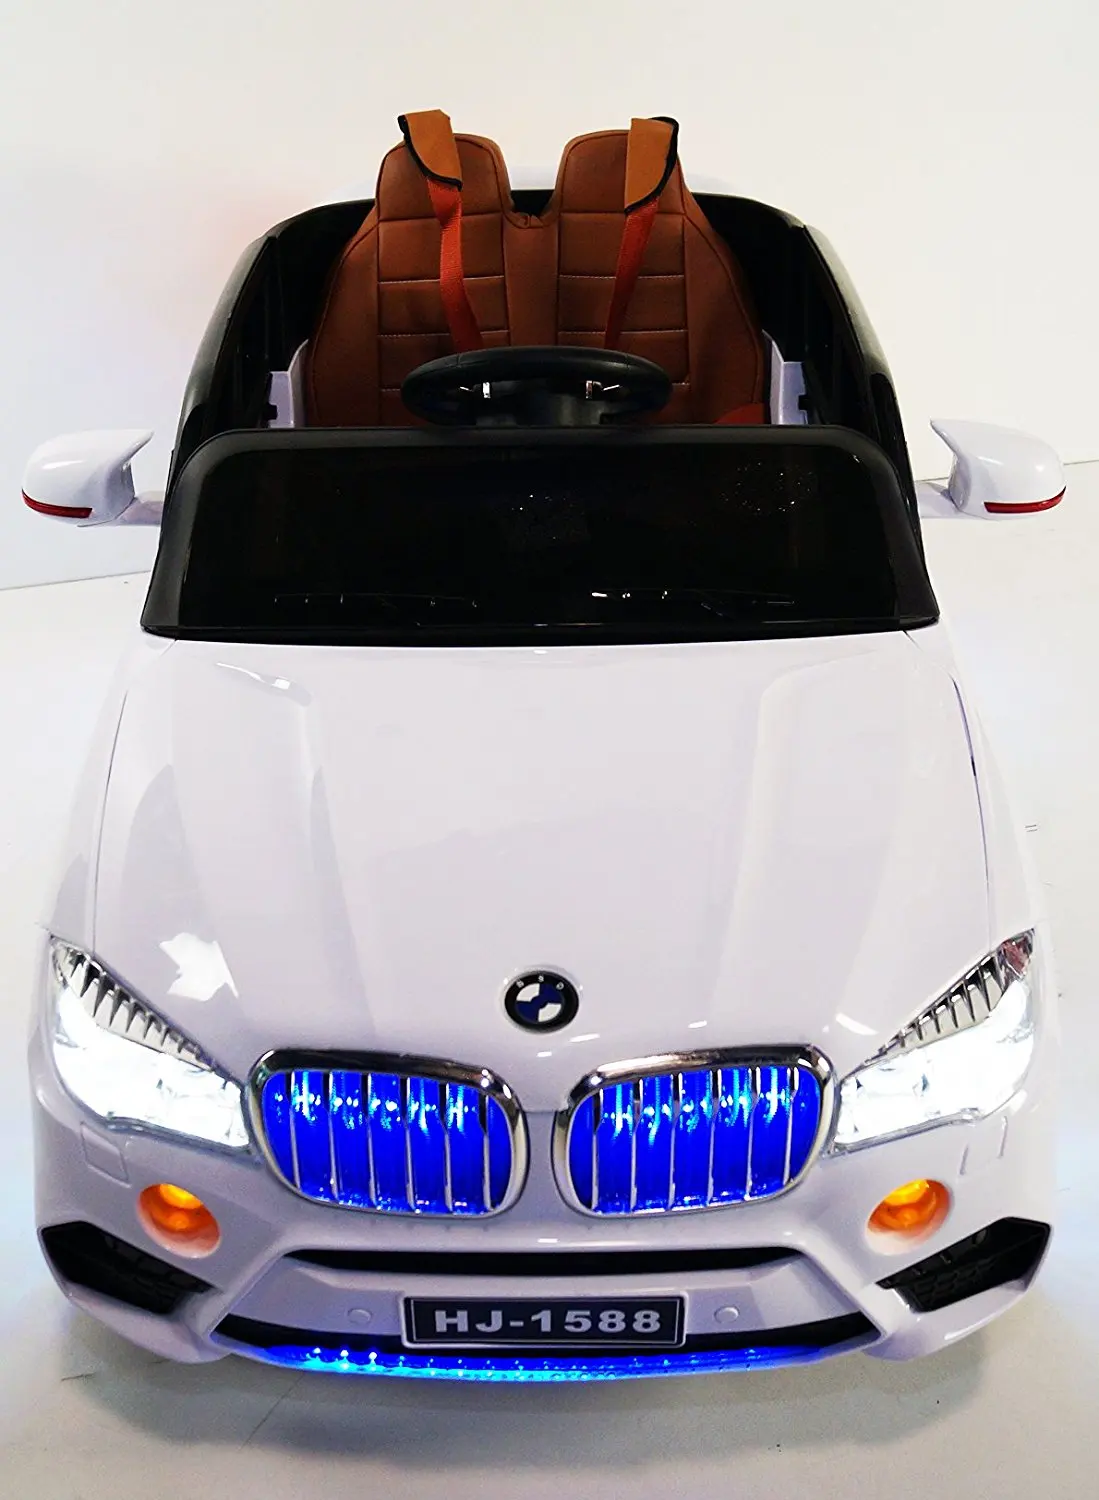 bmw x5 electric toy car